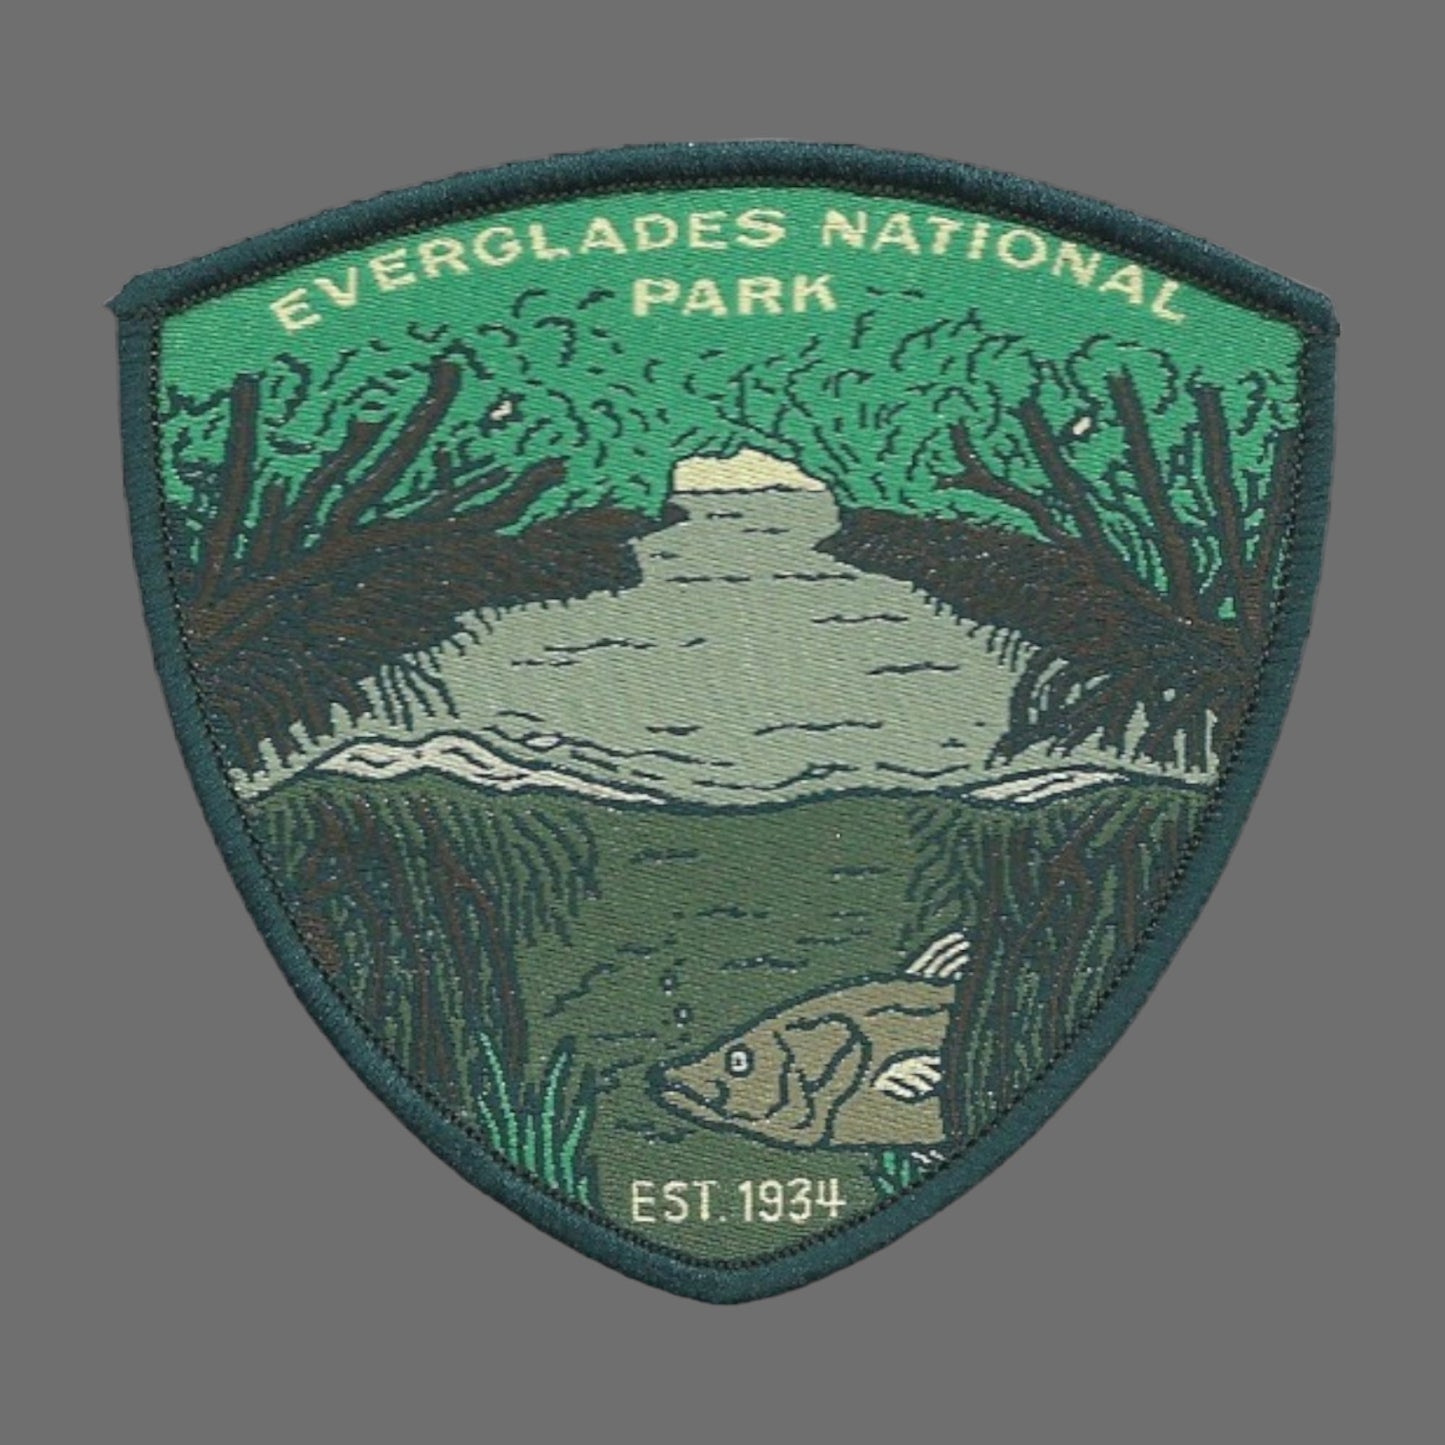 Florida Patch – Everglades National Park - Travel Patch – Souvenir Patch 2.8" Iron On Sew On Embellishment Applique